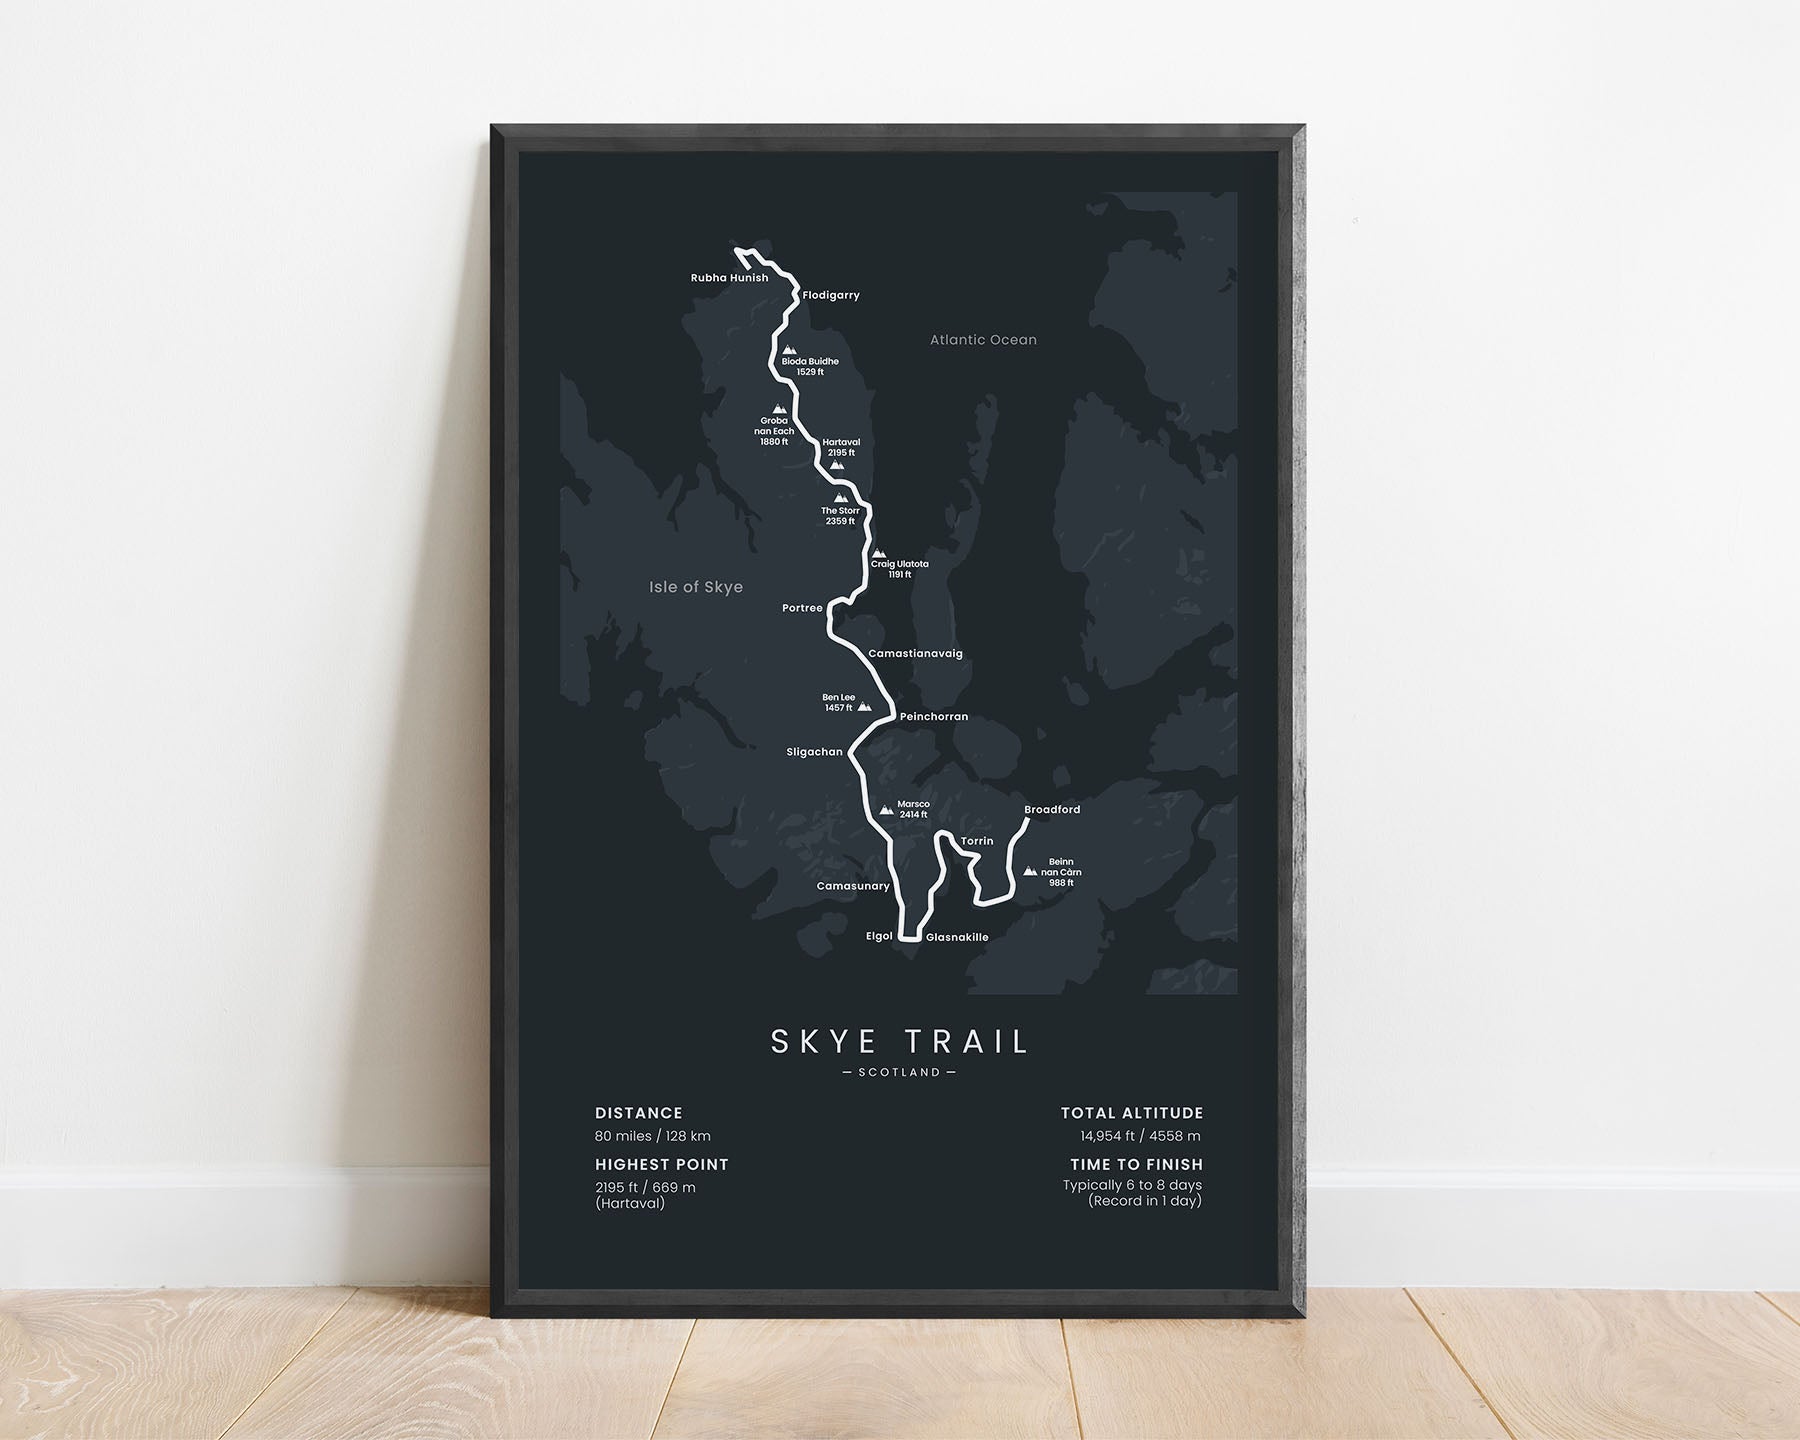 Skye Trail Ultra (Scottish Highlands) trek map art with black background